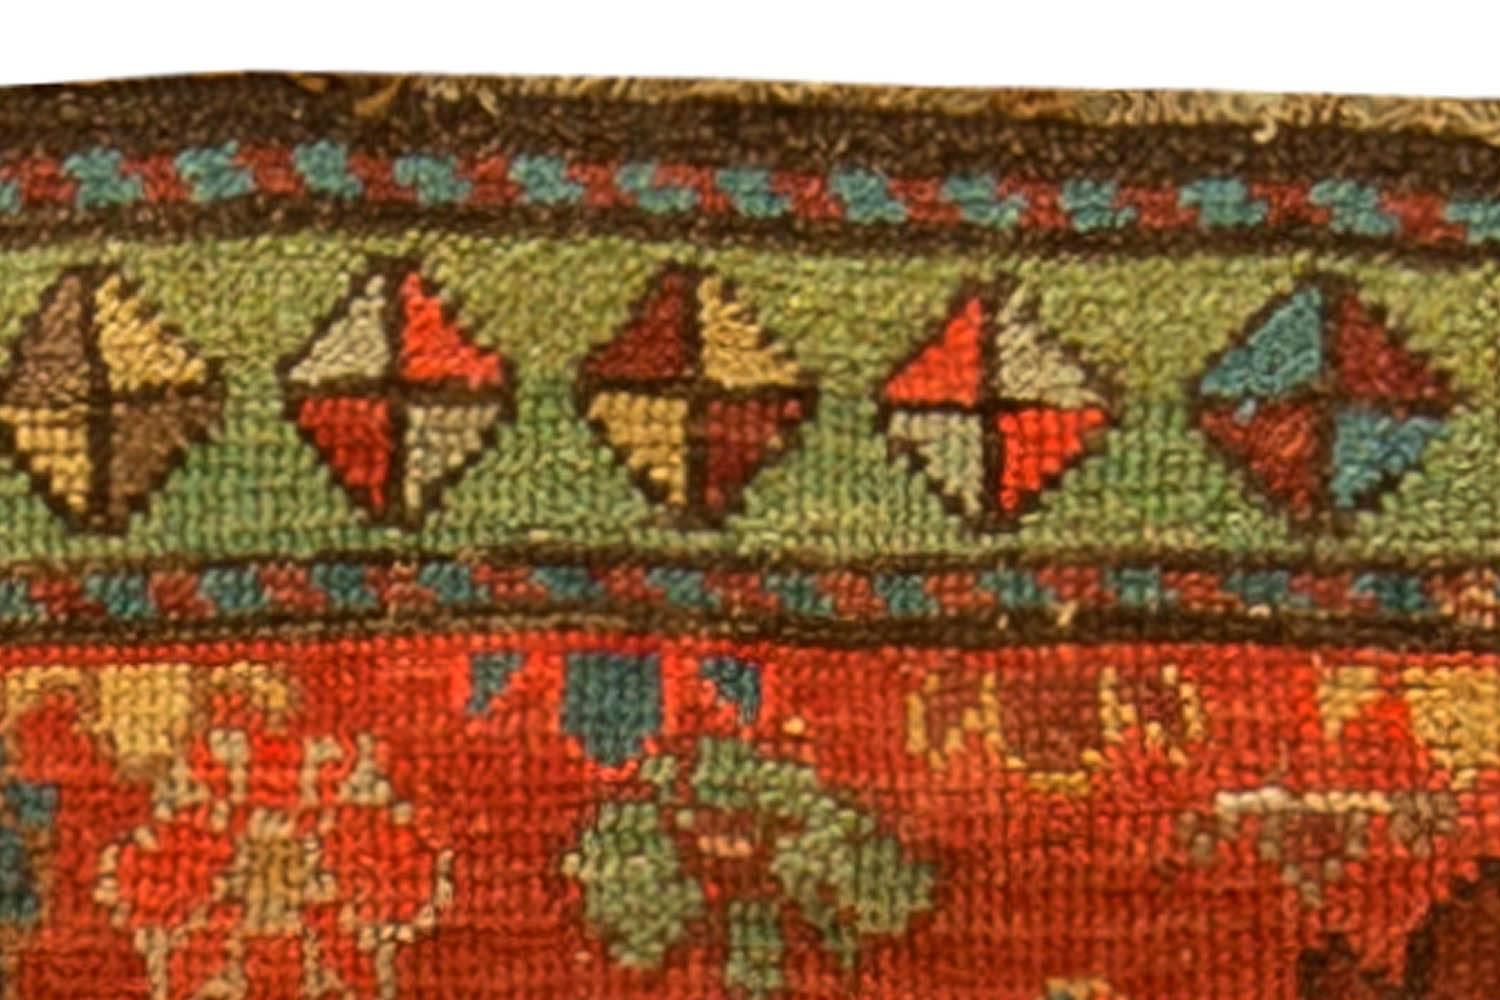 Hand-Knotted Early 20th Century Caucasian Orange Green Handmade Wool Rug by Doris Leslie Blau